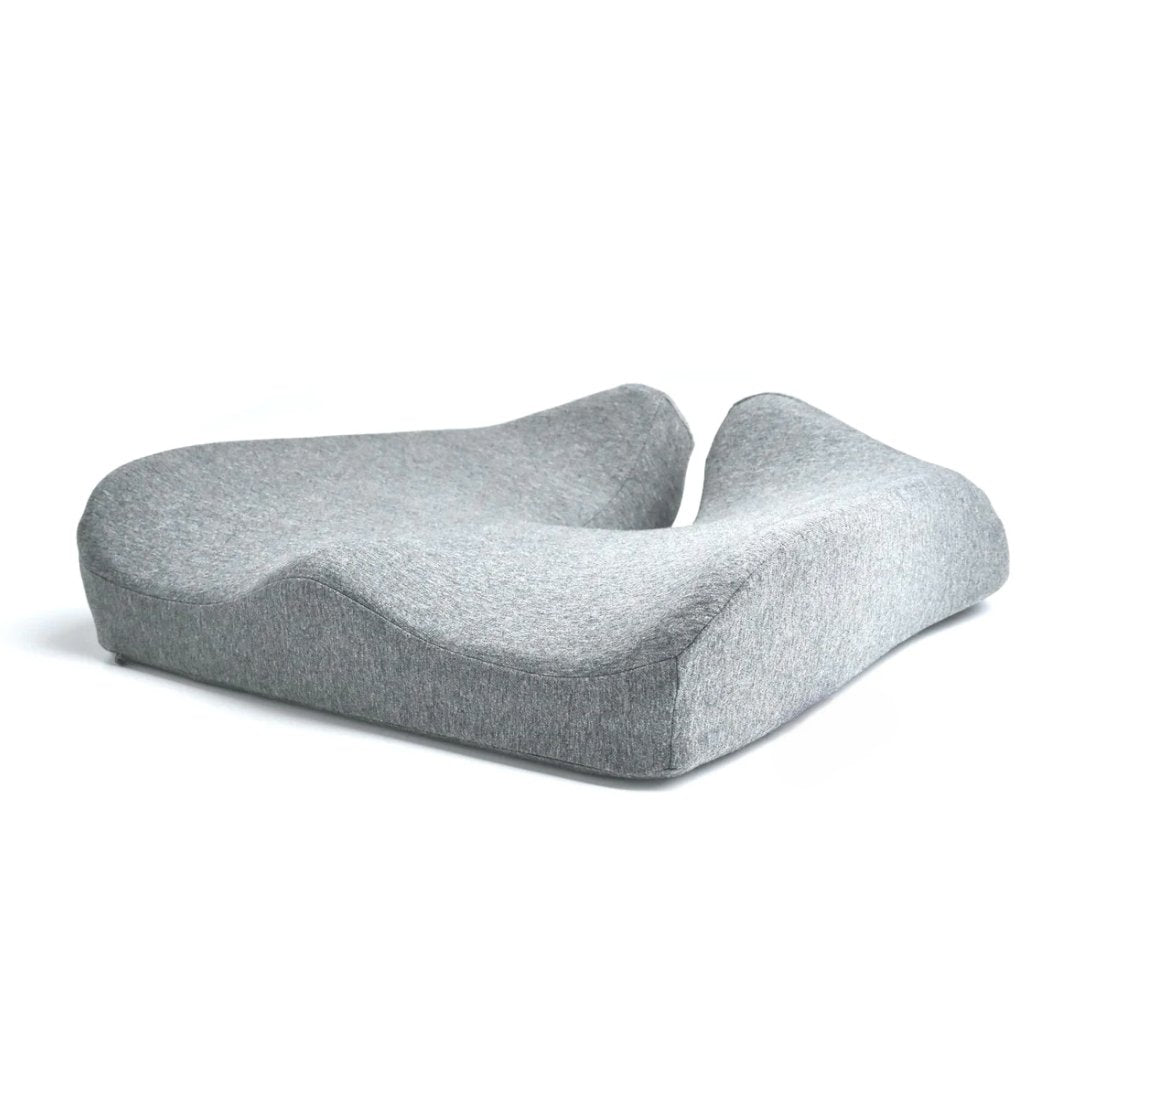 ReliefMax Seat Cushion - bellanza